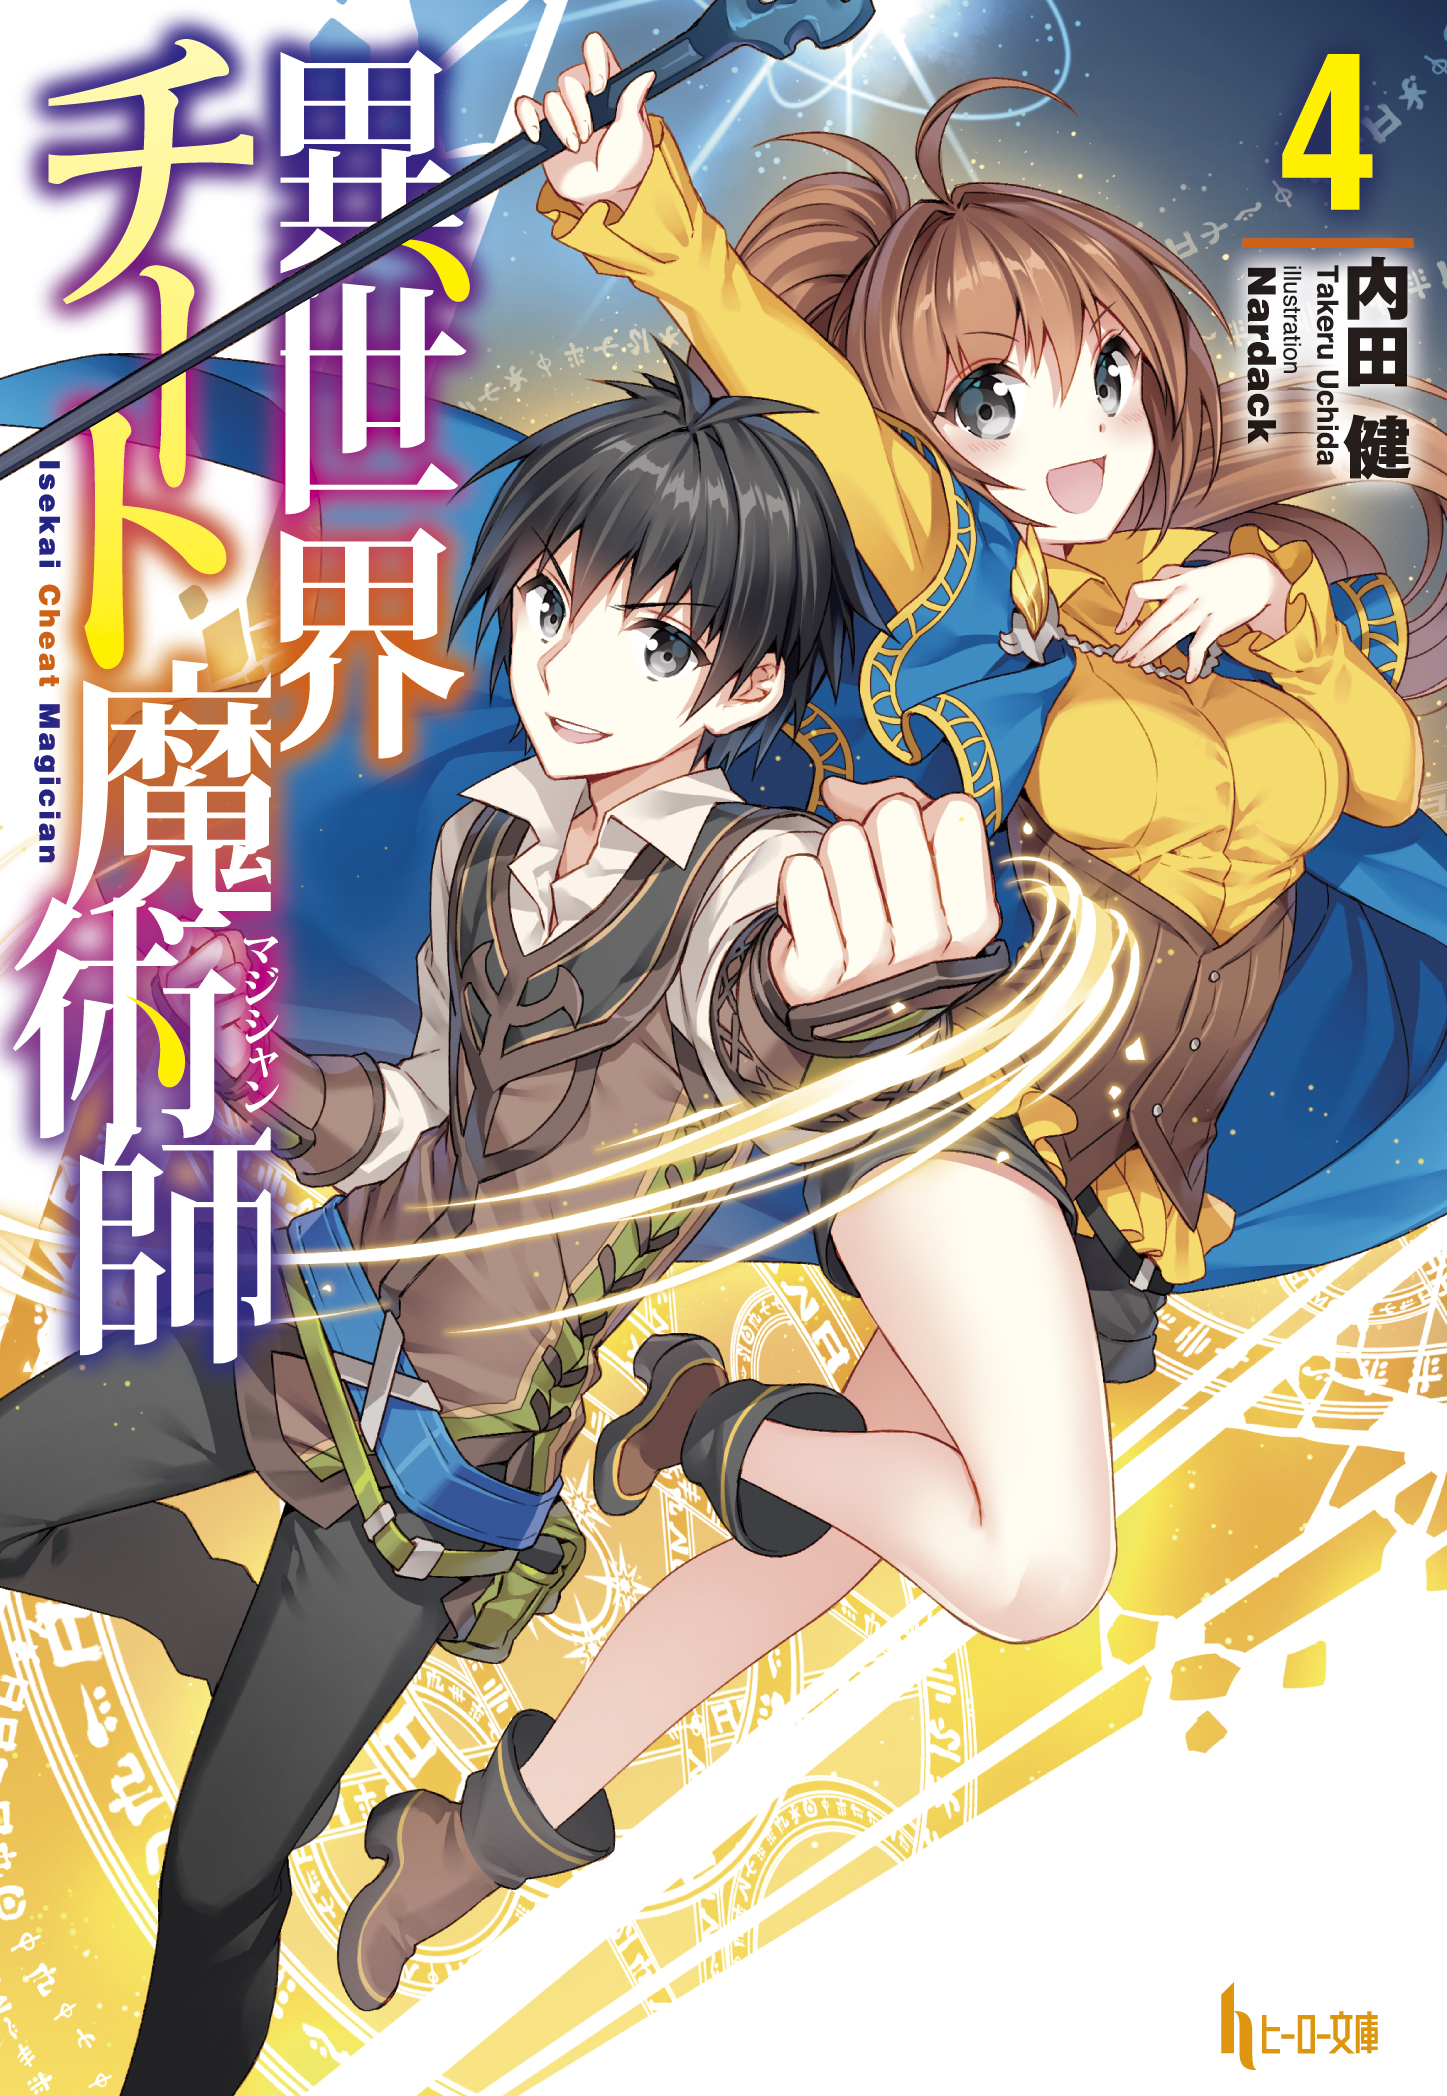 Japanese Manga Comic Book Isekai Cheat Majutsushi Magician 異世界チート魔術師 1-13  set